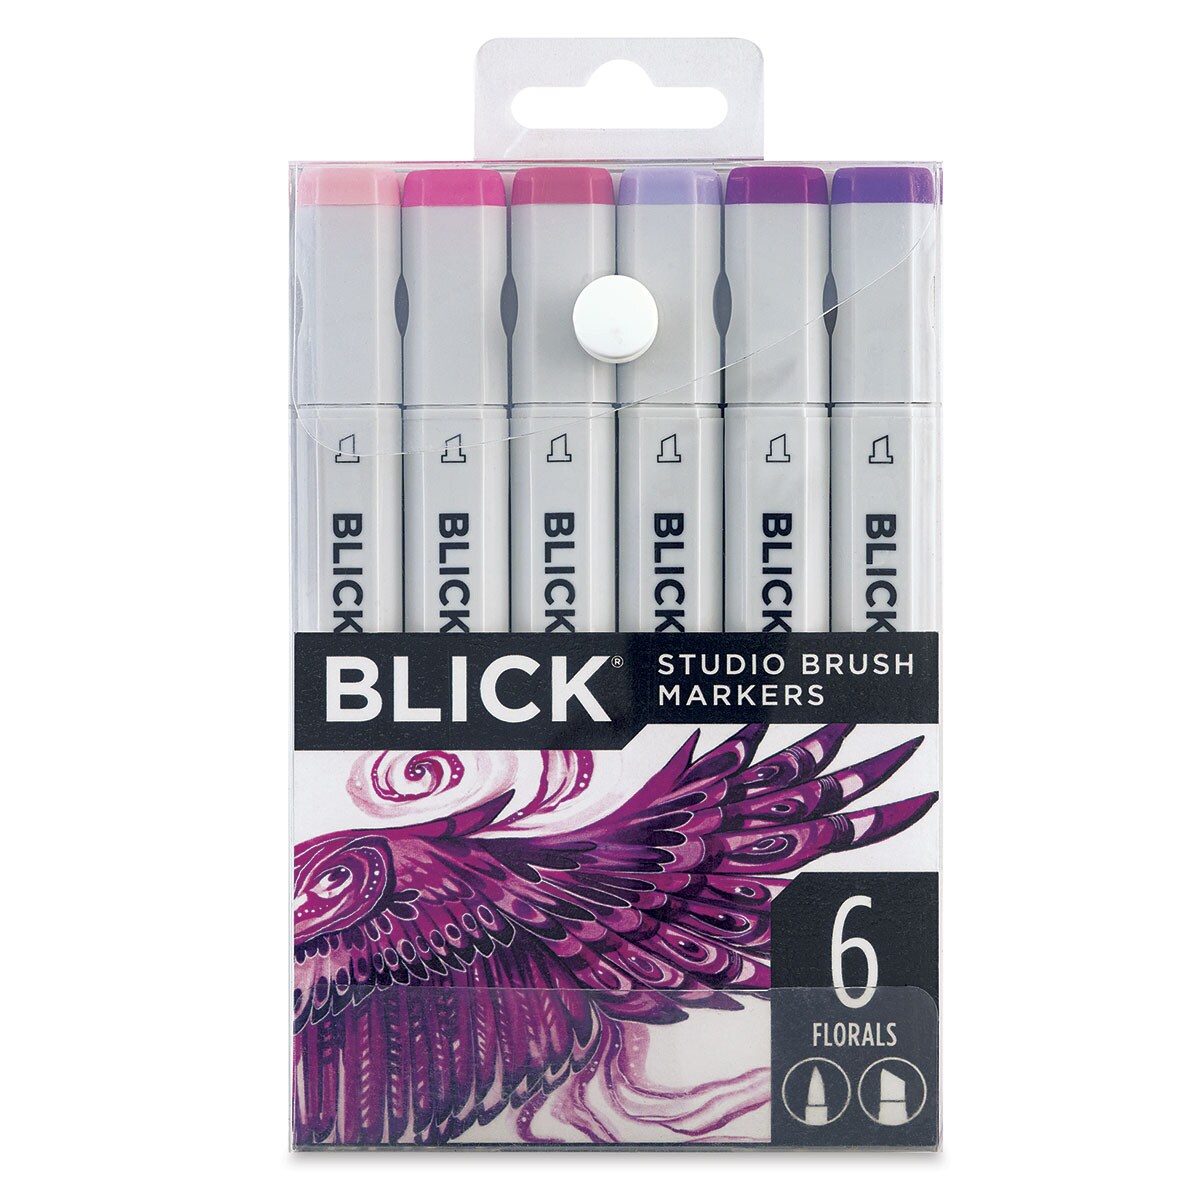 Blick Studio Brush Markers - Floral Colors, Set of 6